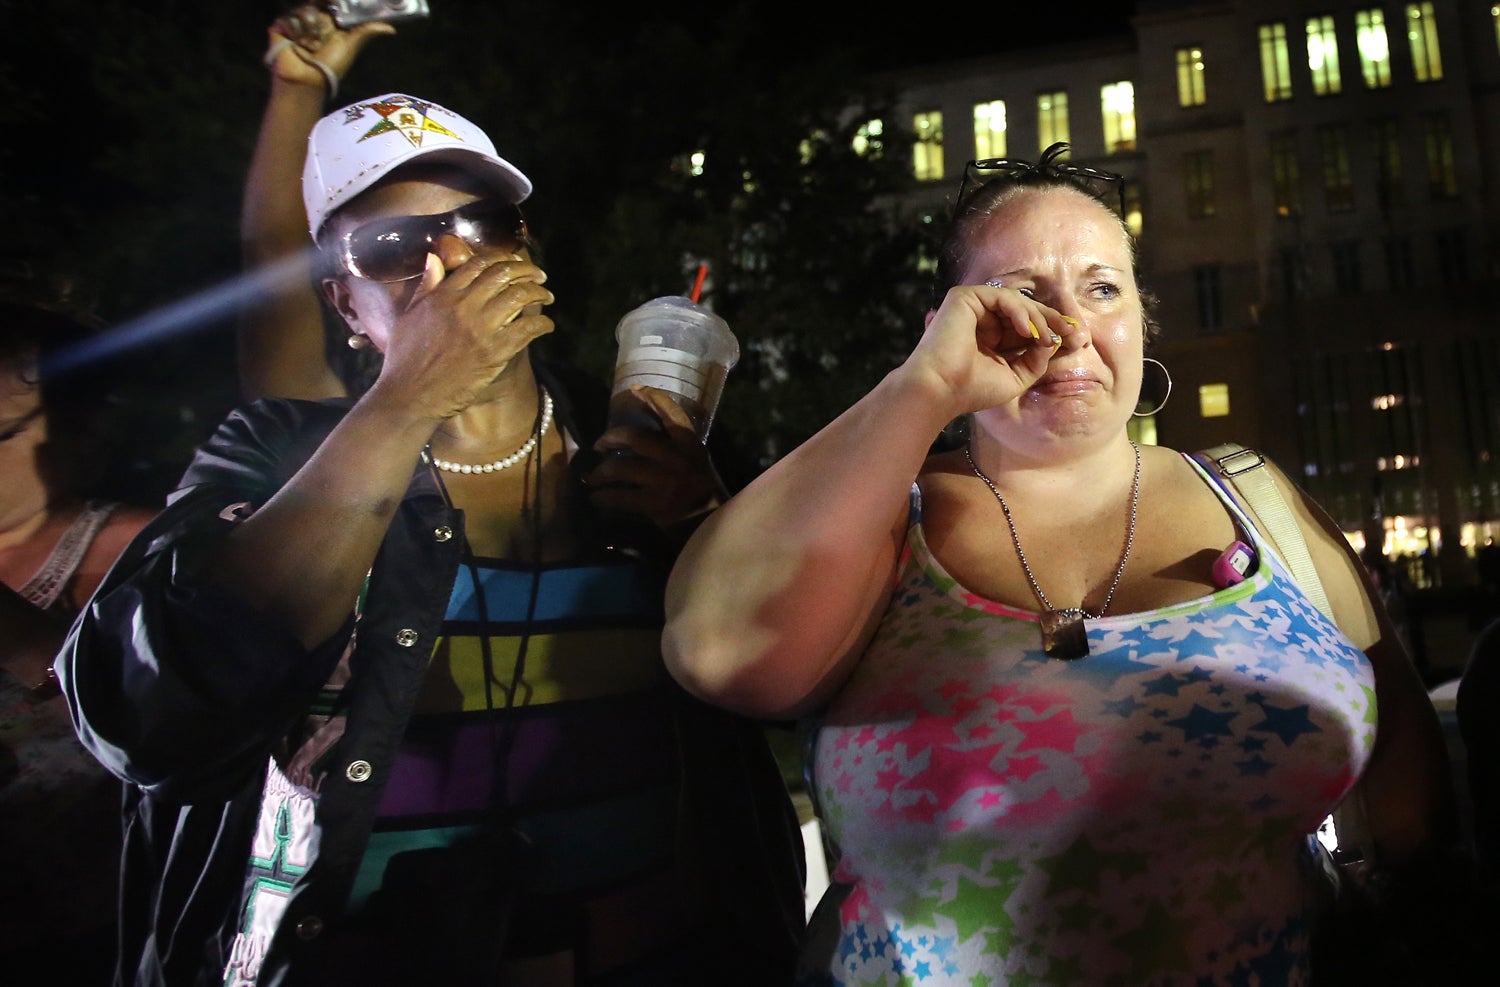 Zimmerman Verdict: Demonstrators React Across the Nation